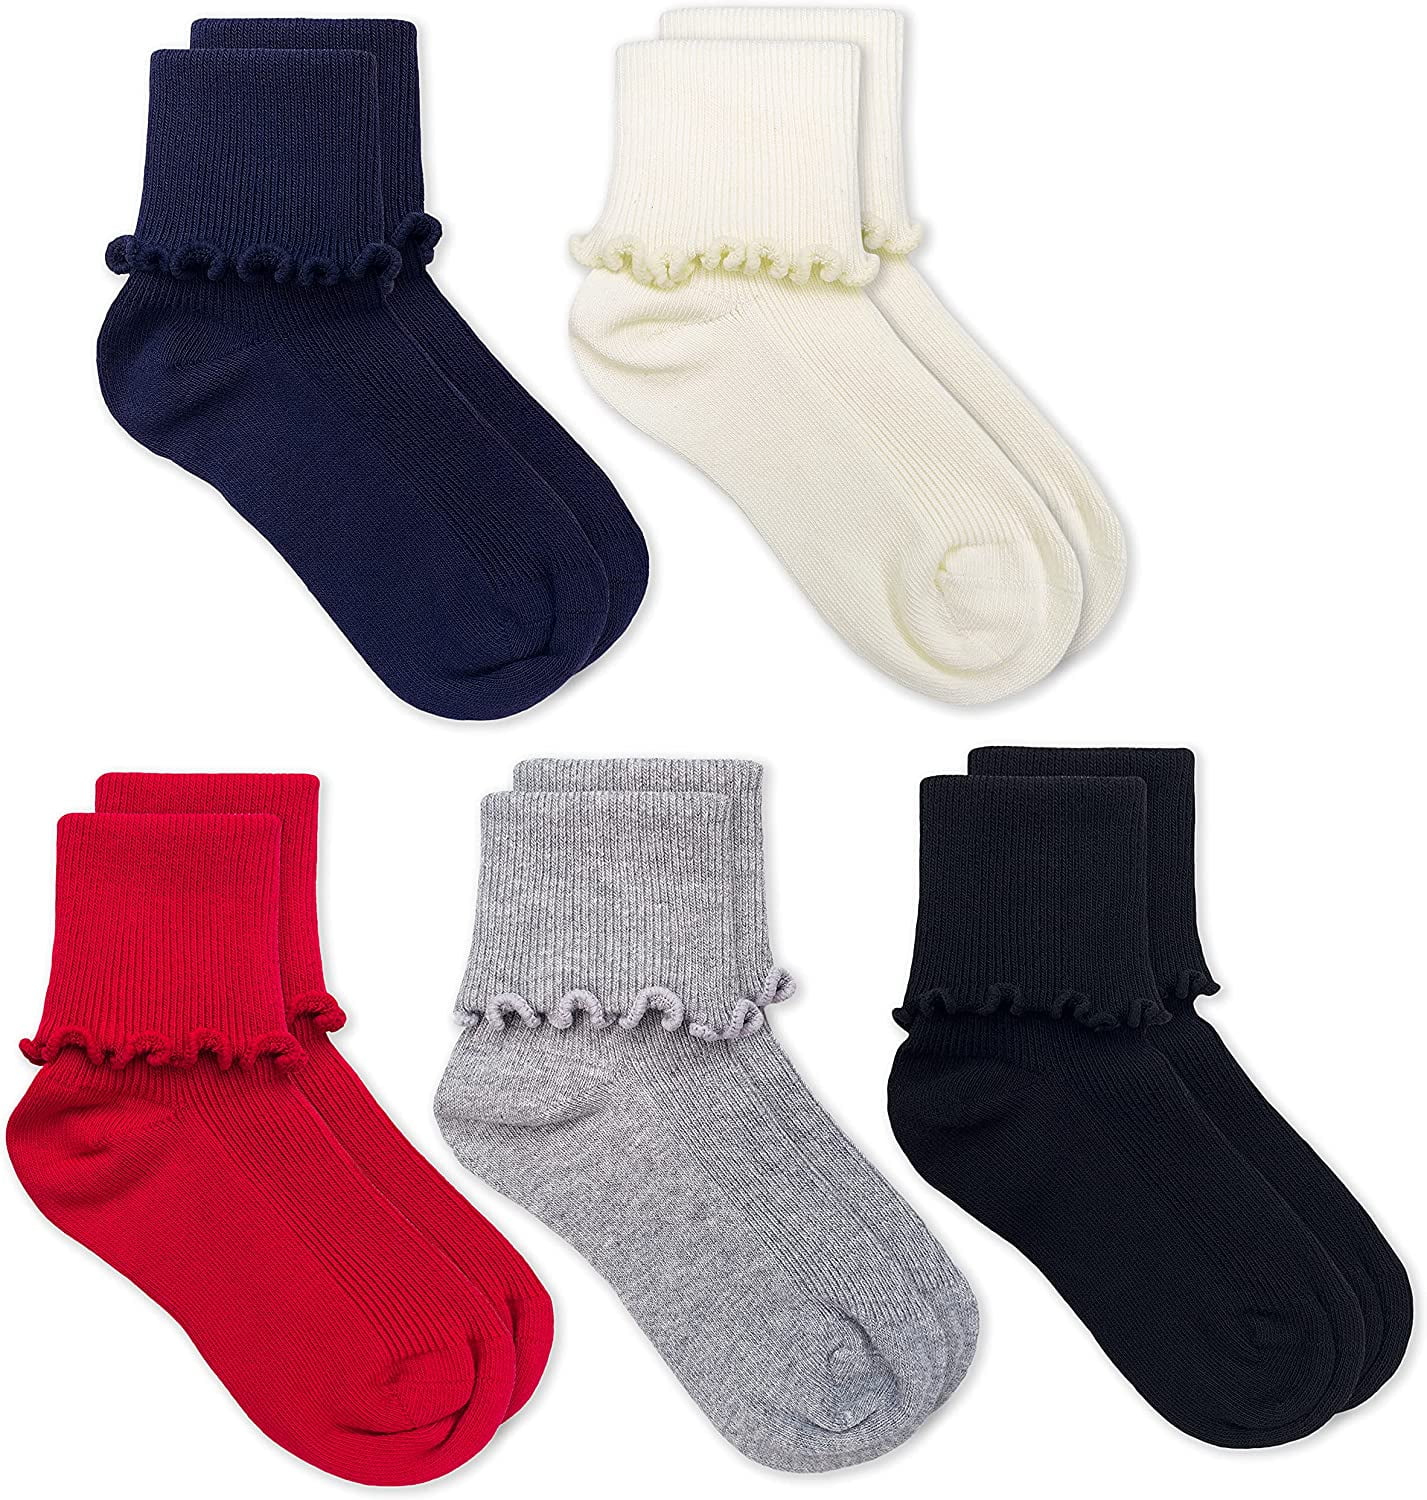 JEFFERIES Ankle Socks SEAMLESS Cotton Blend NB-10 YRS Ripple Edge Trim Colors